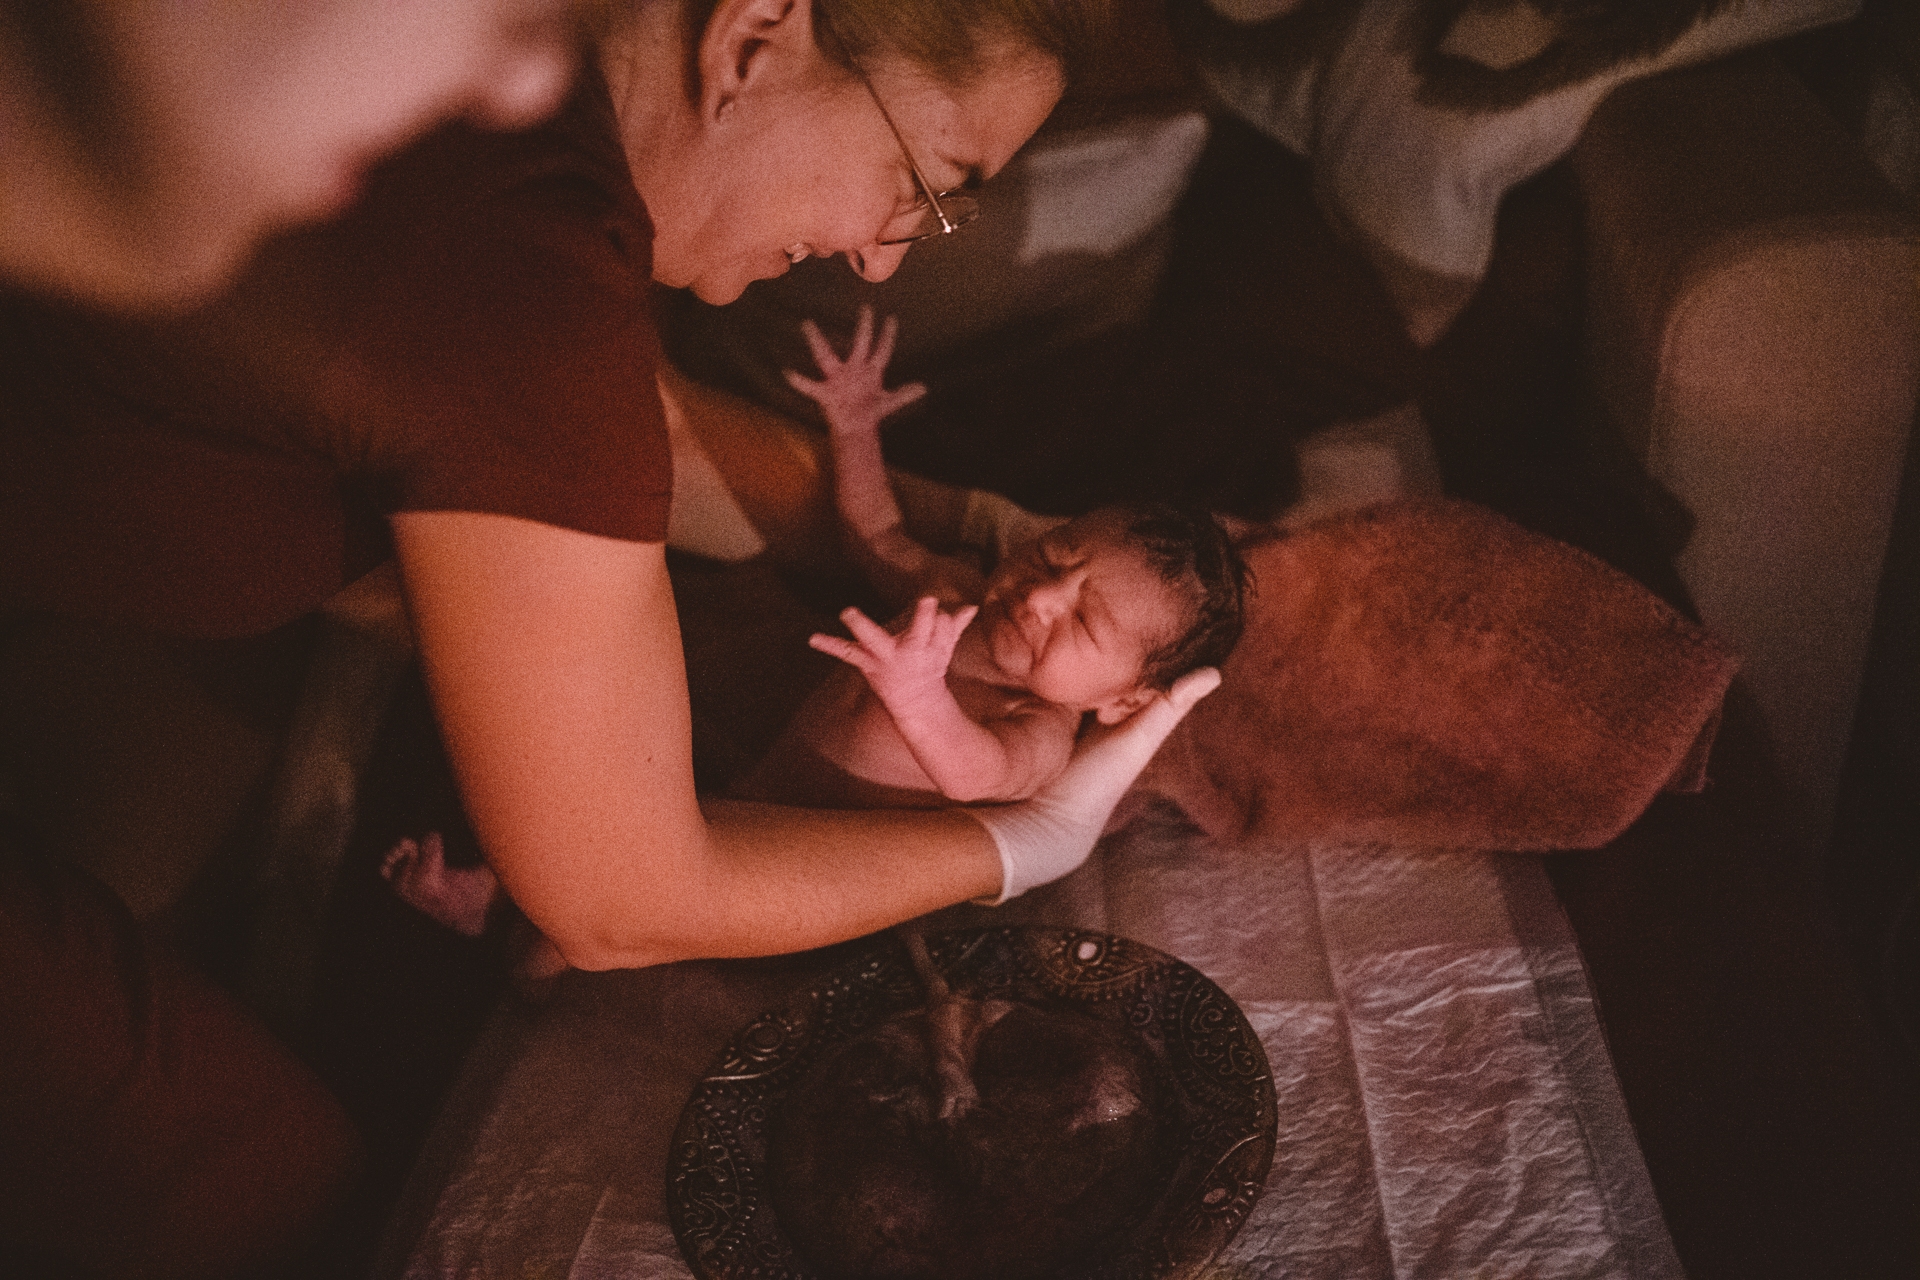 Frischgeboren. Wundervolles neues Leben. Dokumentarische Fotografie. Geburtsfotografie. Plazenta. Hebammenarbeit